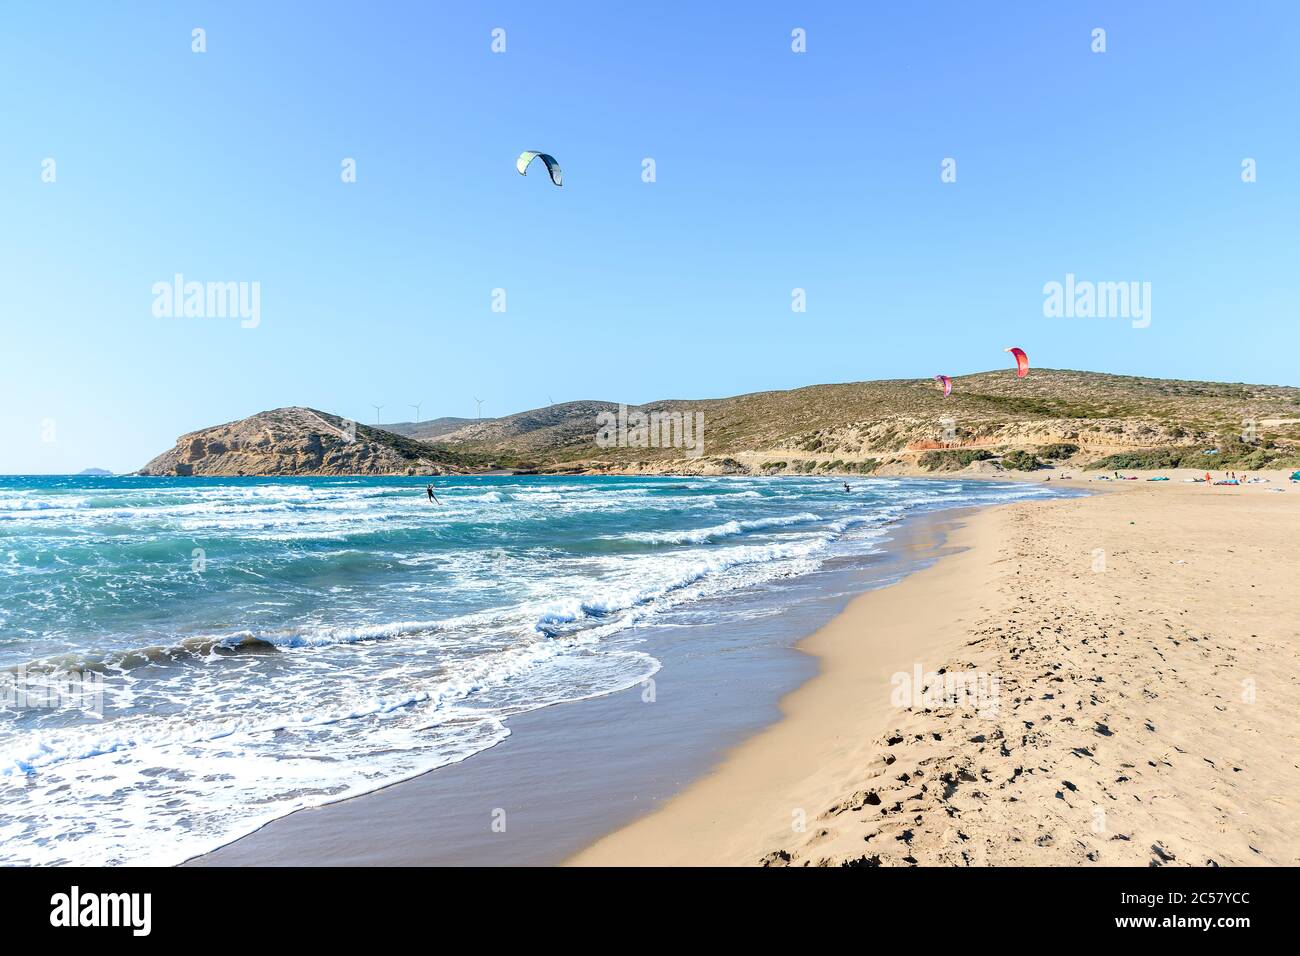 Prasonisi beach with kitesurfers surfing in waves (Rhodes, Greece) Stock Photo